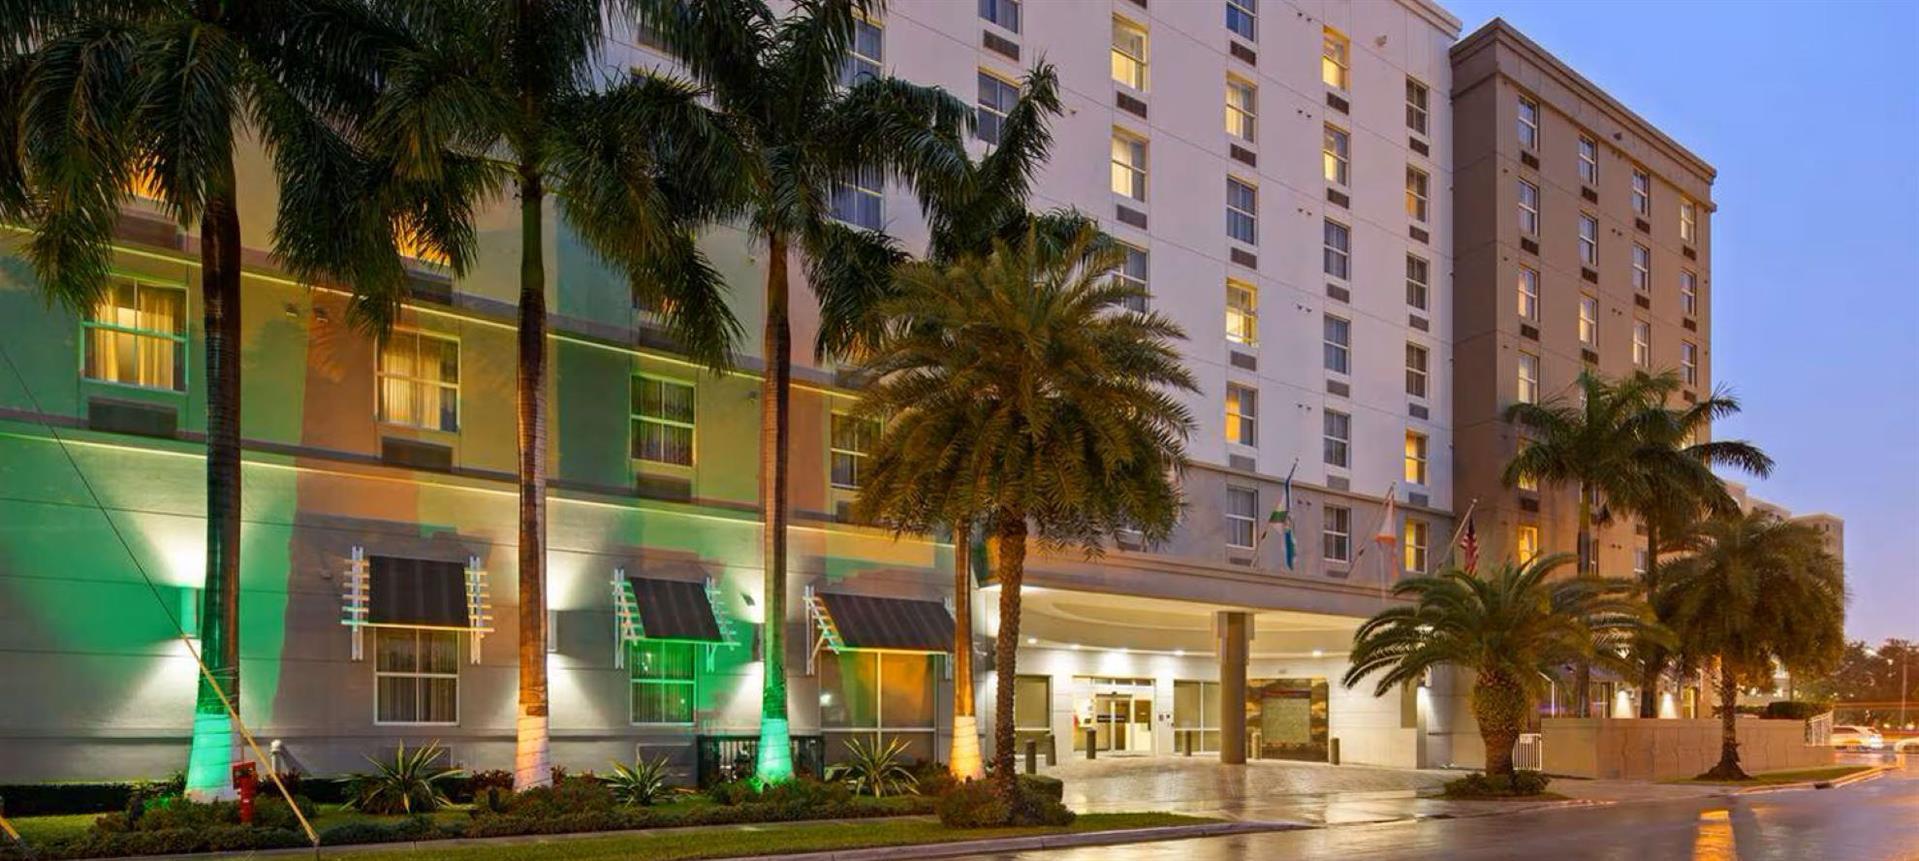 Best Western Plus Miami Intl Airport Hotel & Suites Coral Gables in Miami, FL